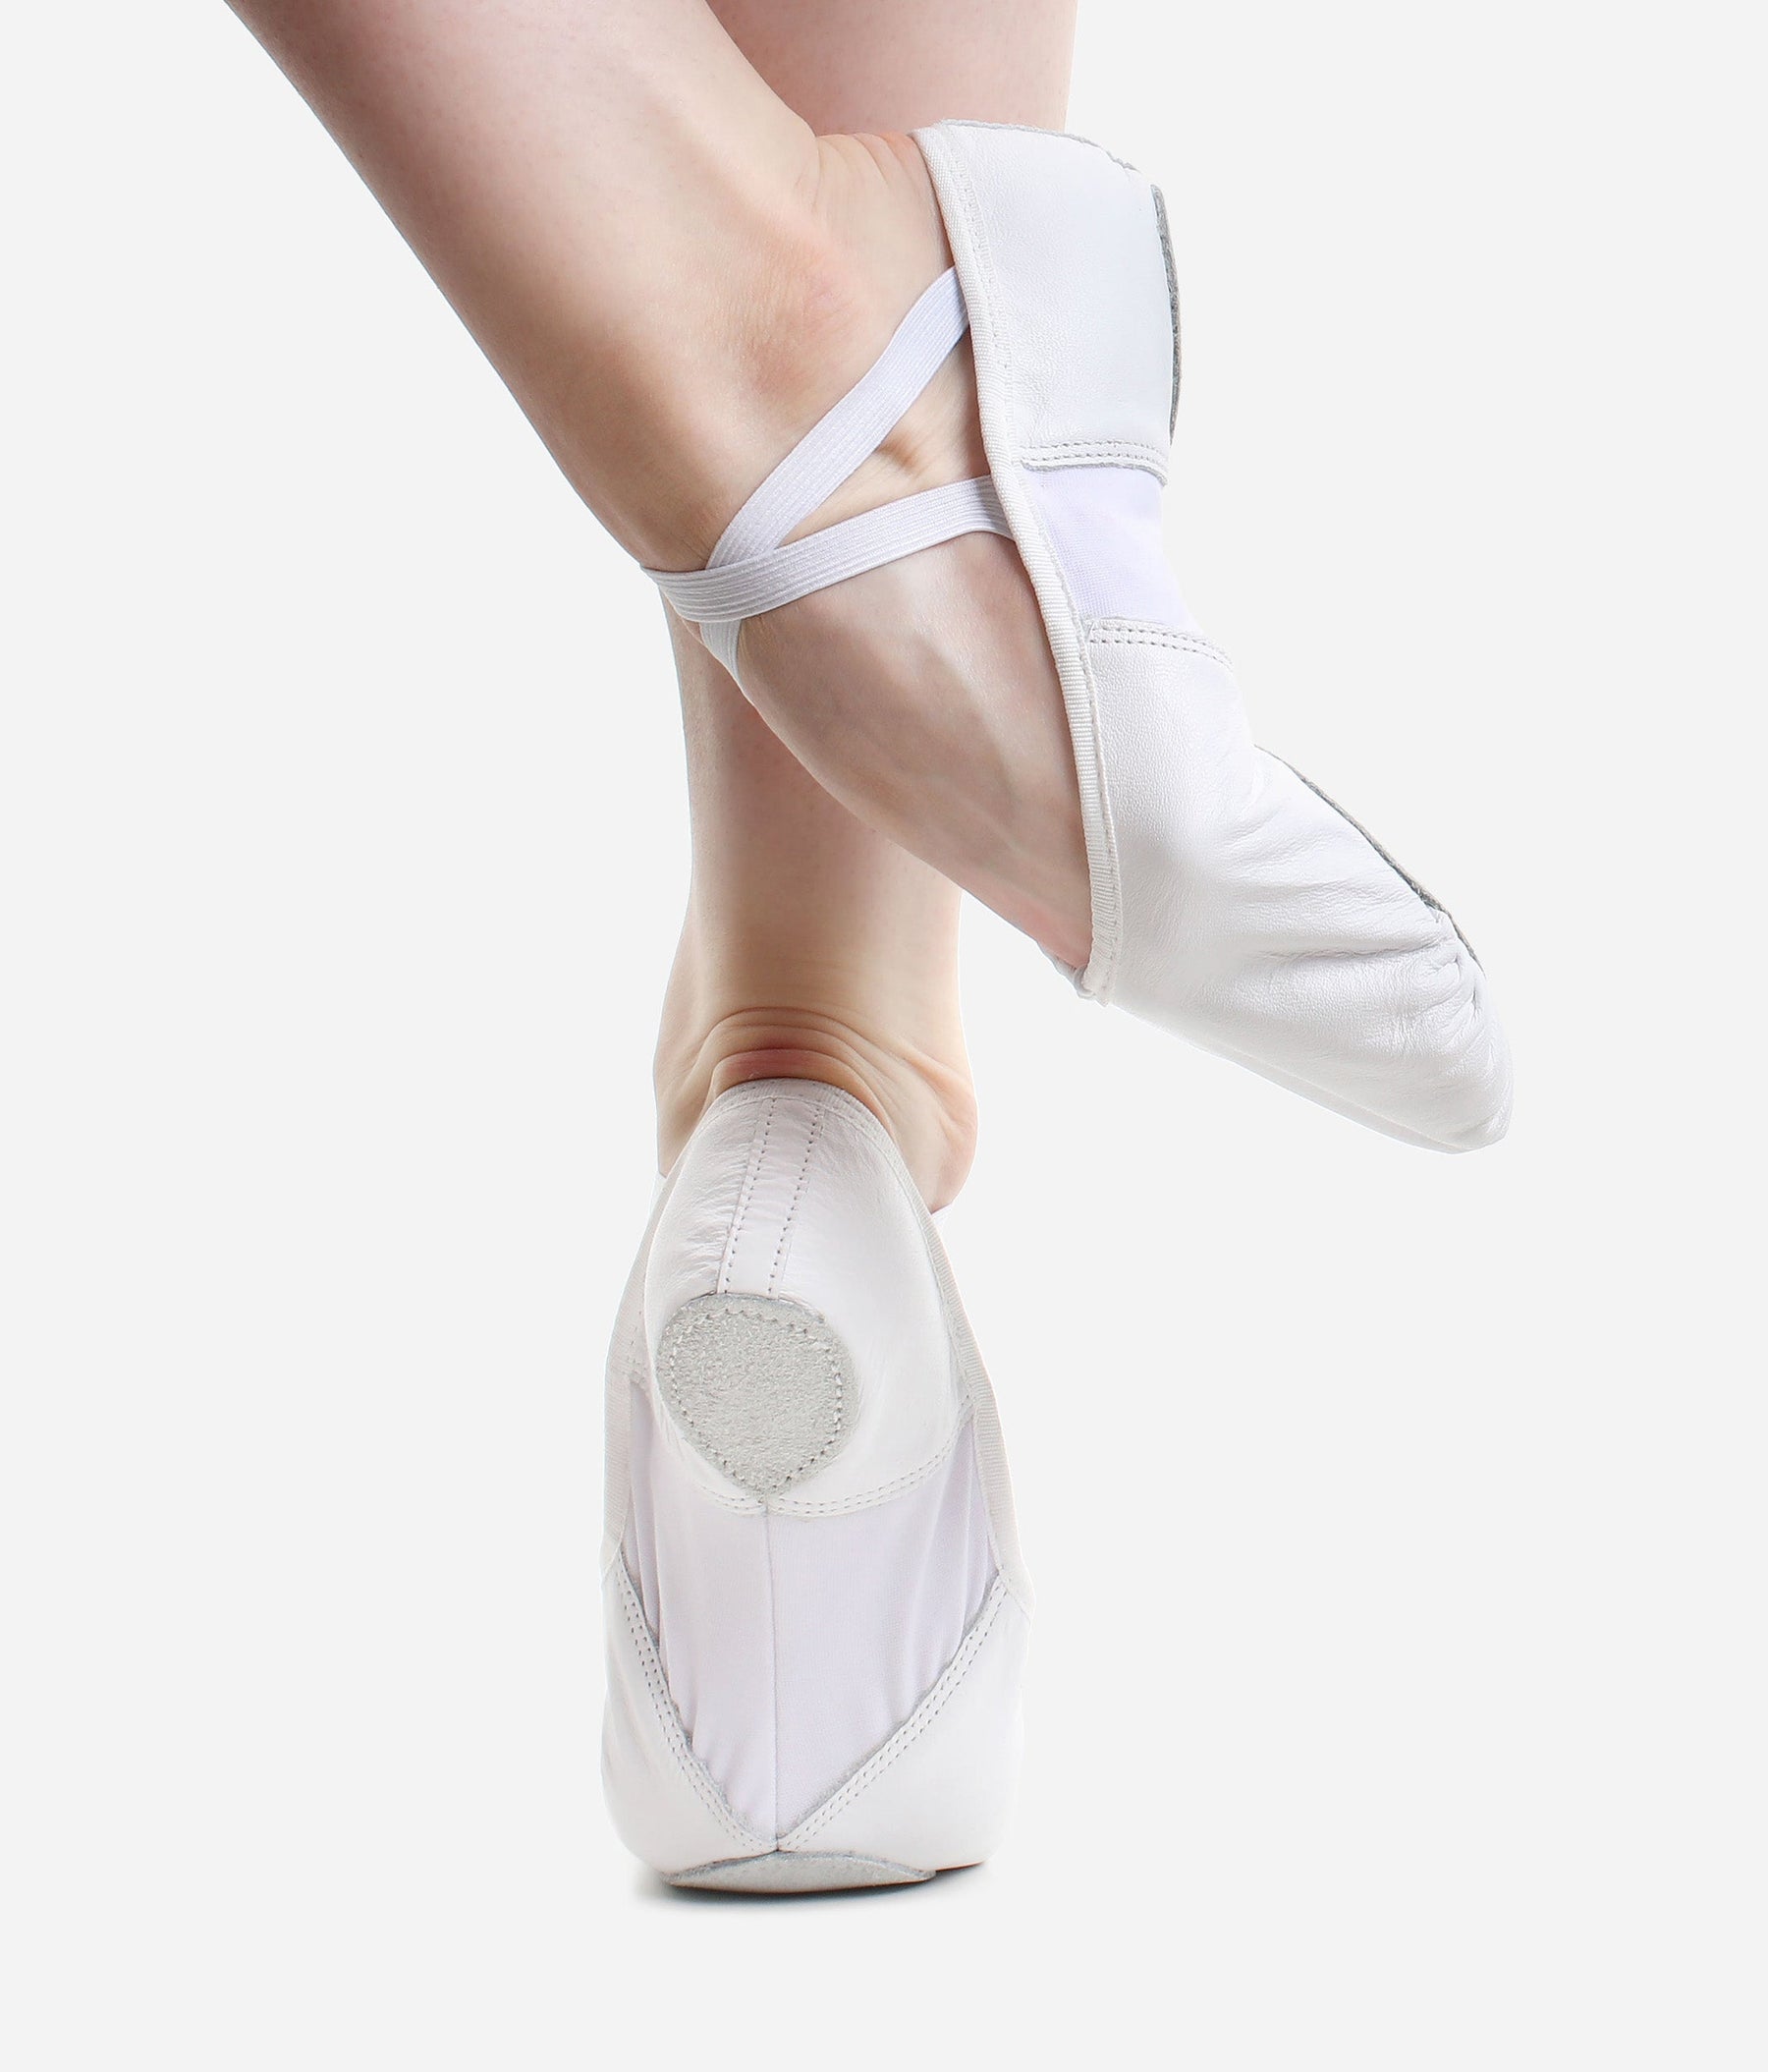 Hybrid Ballet Shoe - BAE 11